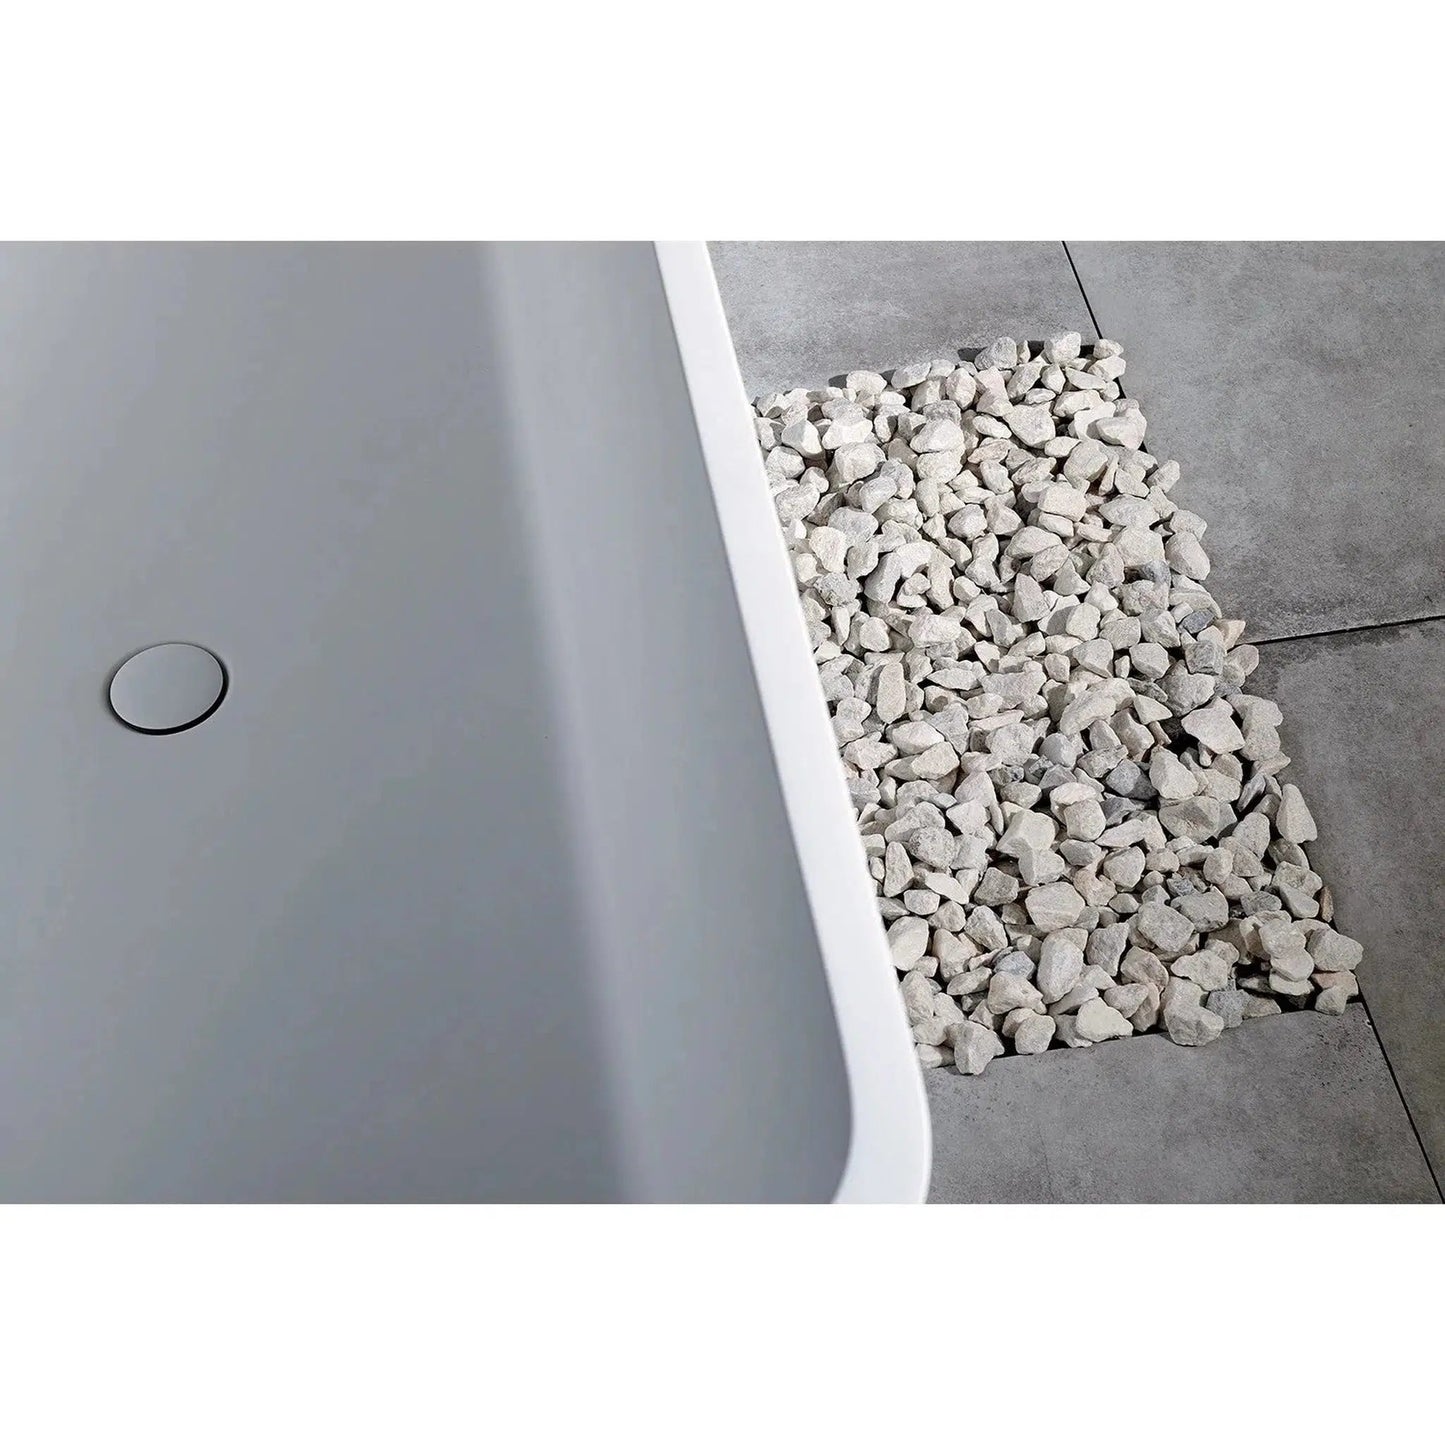 Kingston Brass Aqua Eden Arcticstone 59" x 27" Matte White Solid Surface Stone Freestanding Bathtub With Drain and Overflow